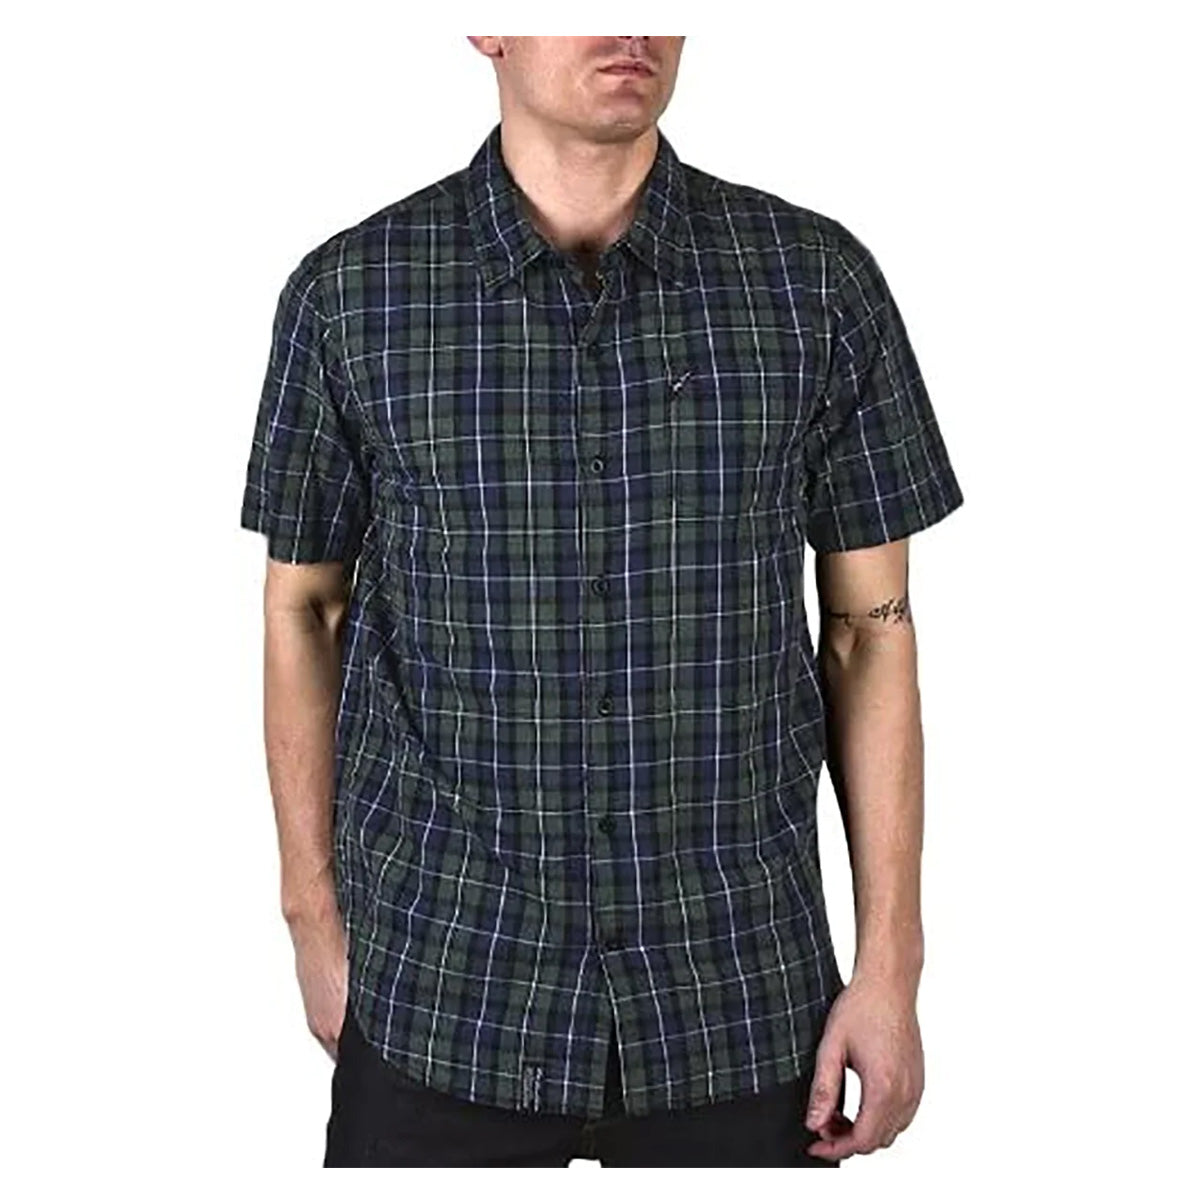 LRG Core Plaid Men's Button Up Short-Sleeve Shirts